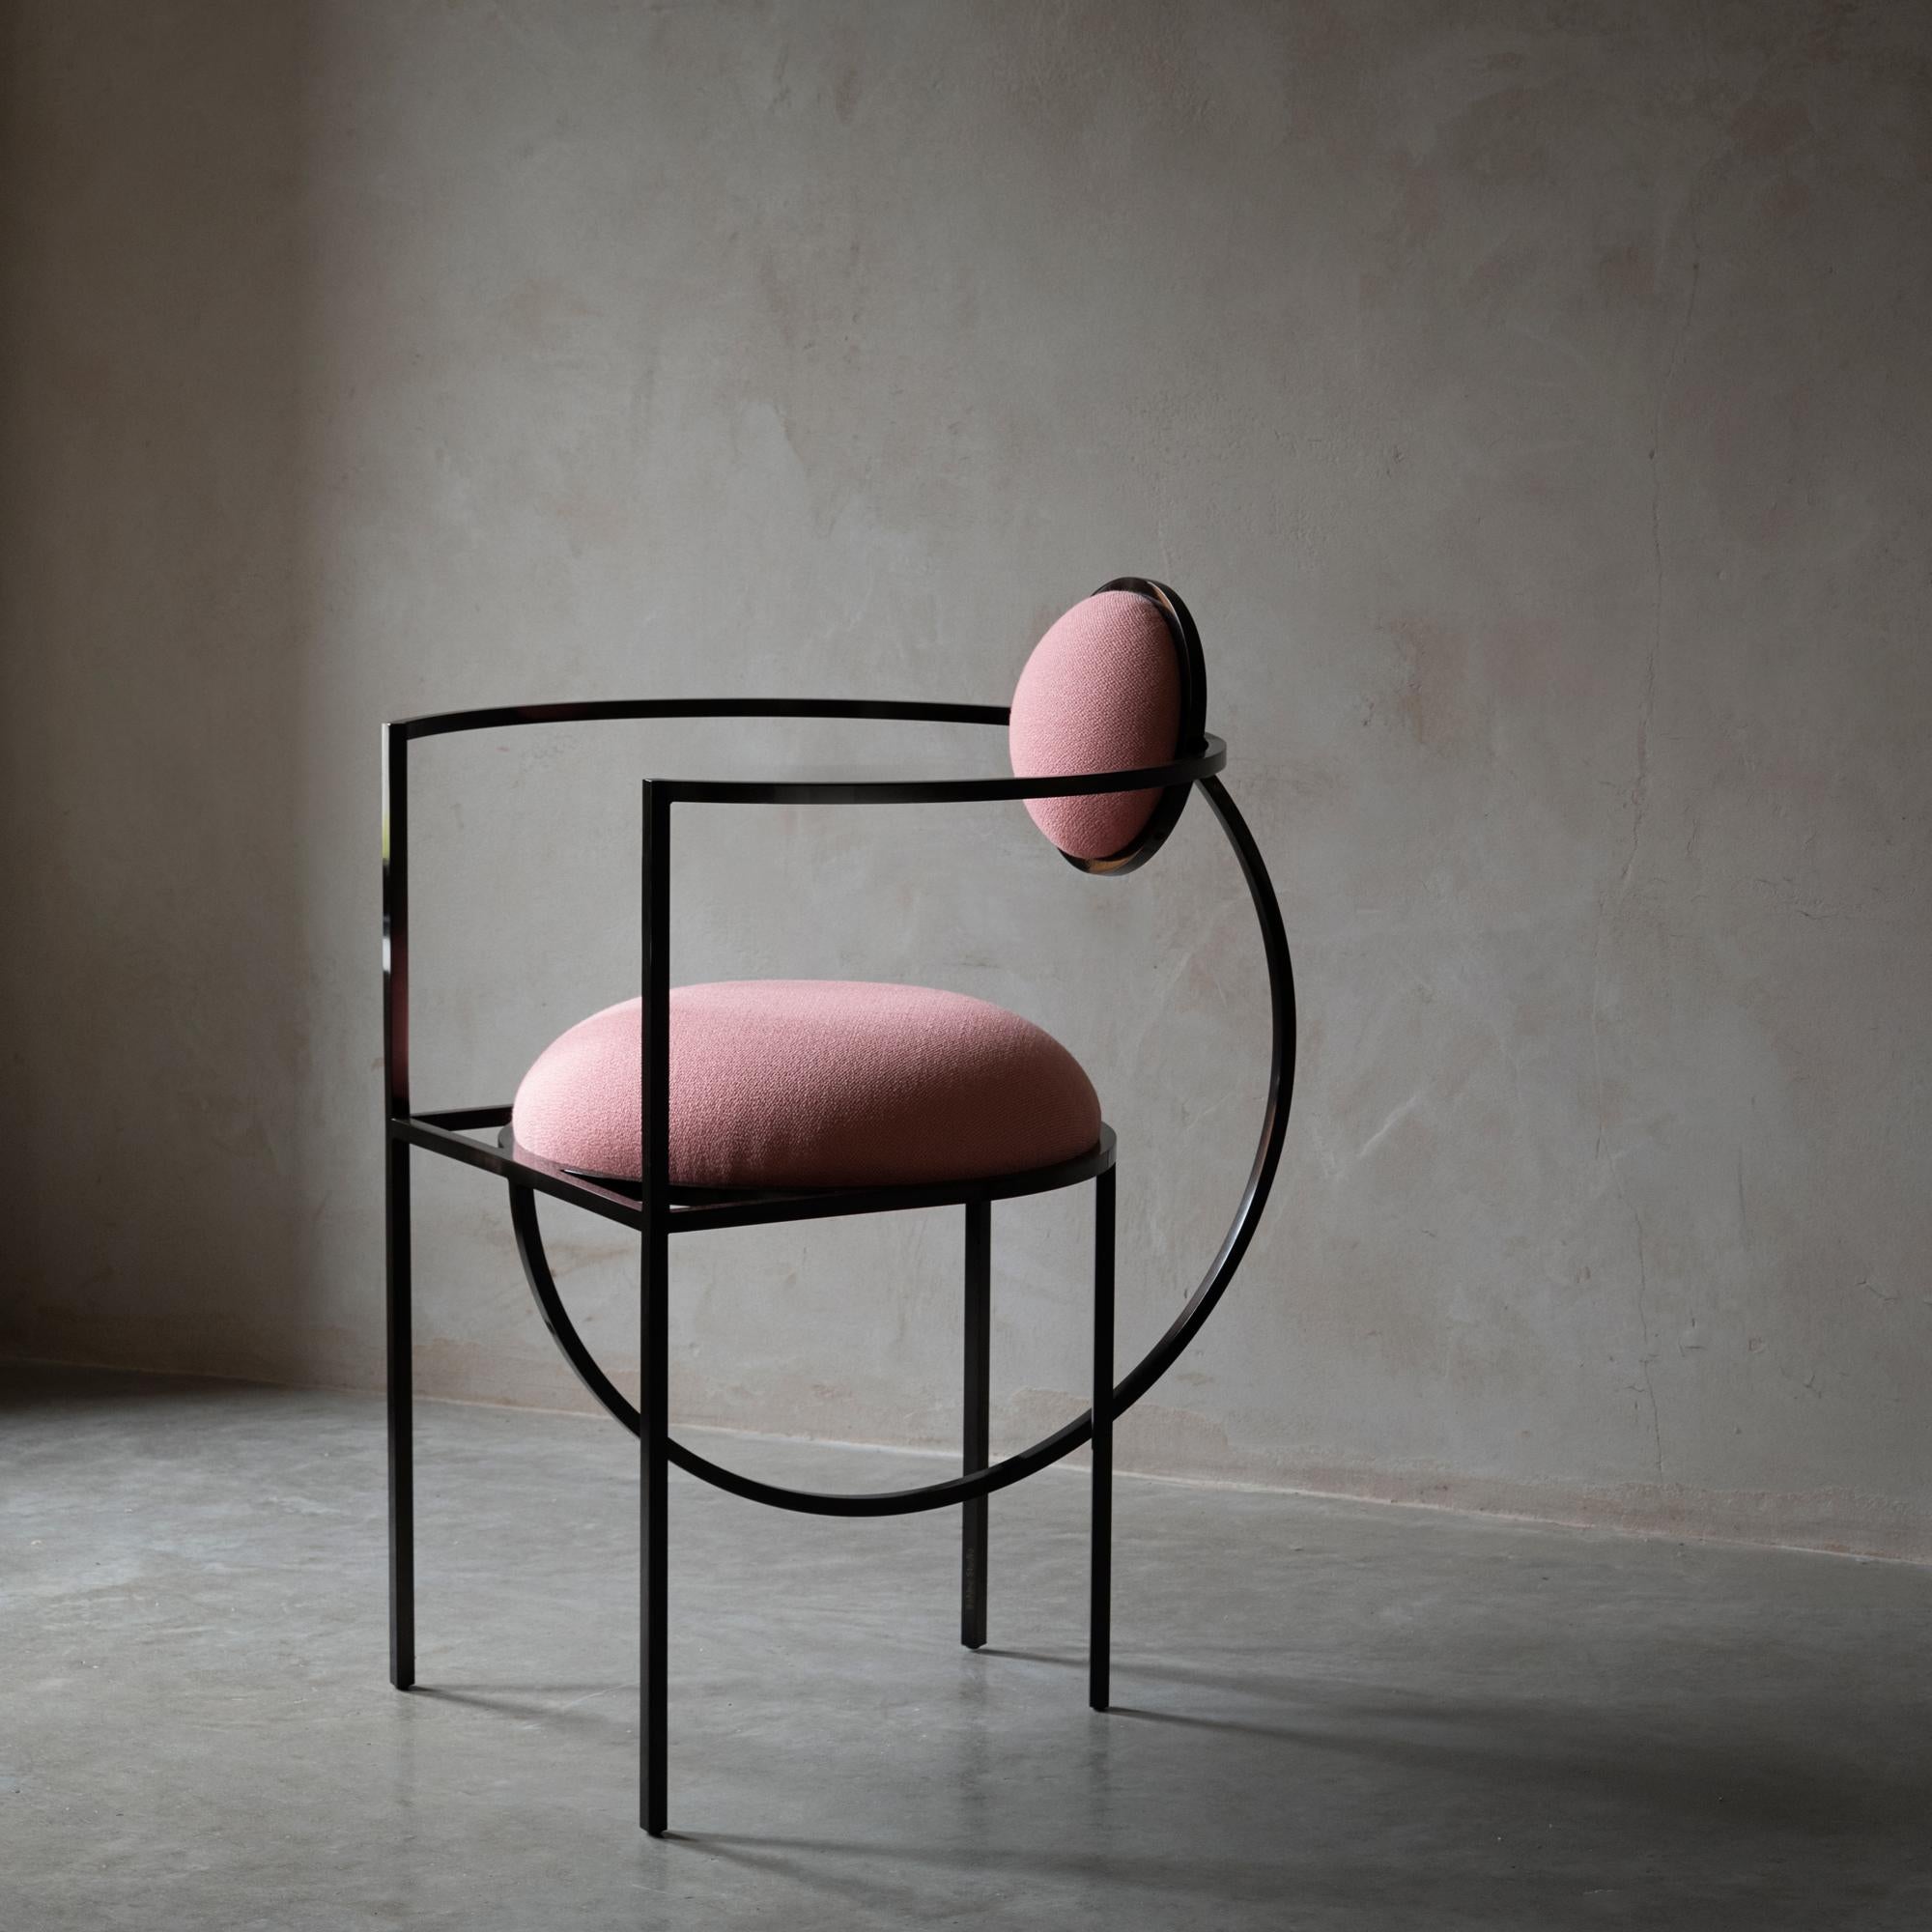 Metalwork Lunar Chair in Pink Wool Fabric and Black Steel Frame by Lara Bohinc For Sale